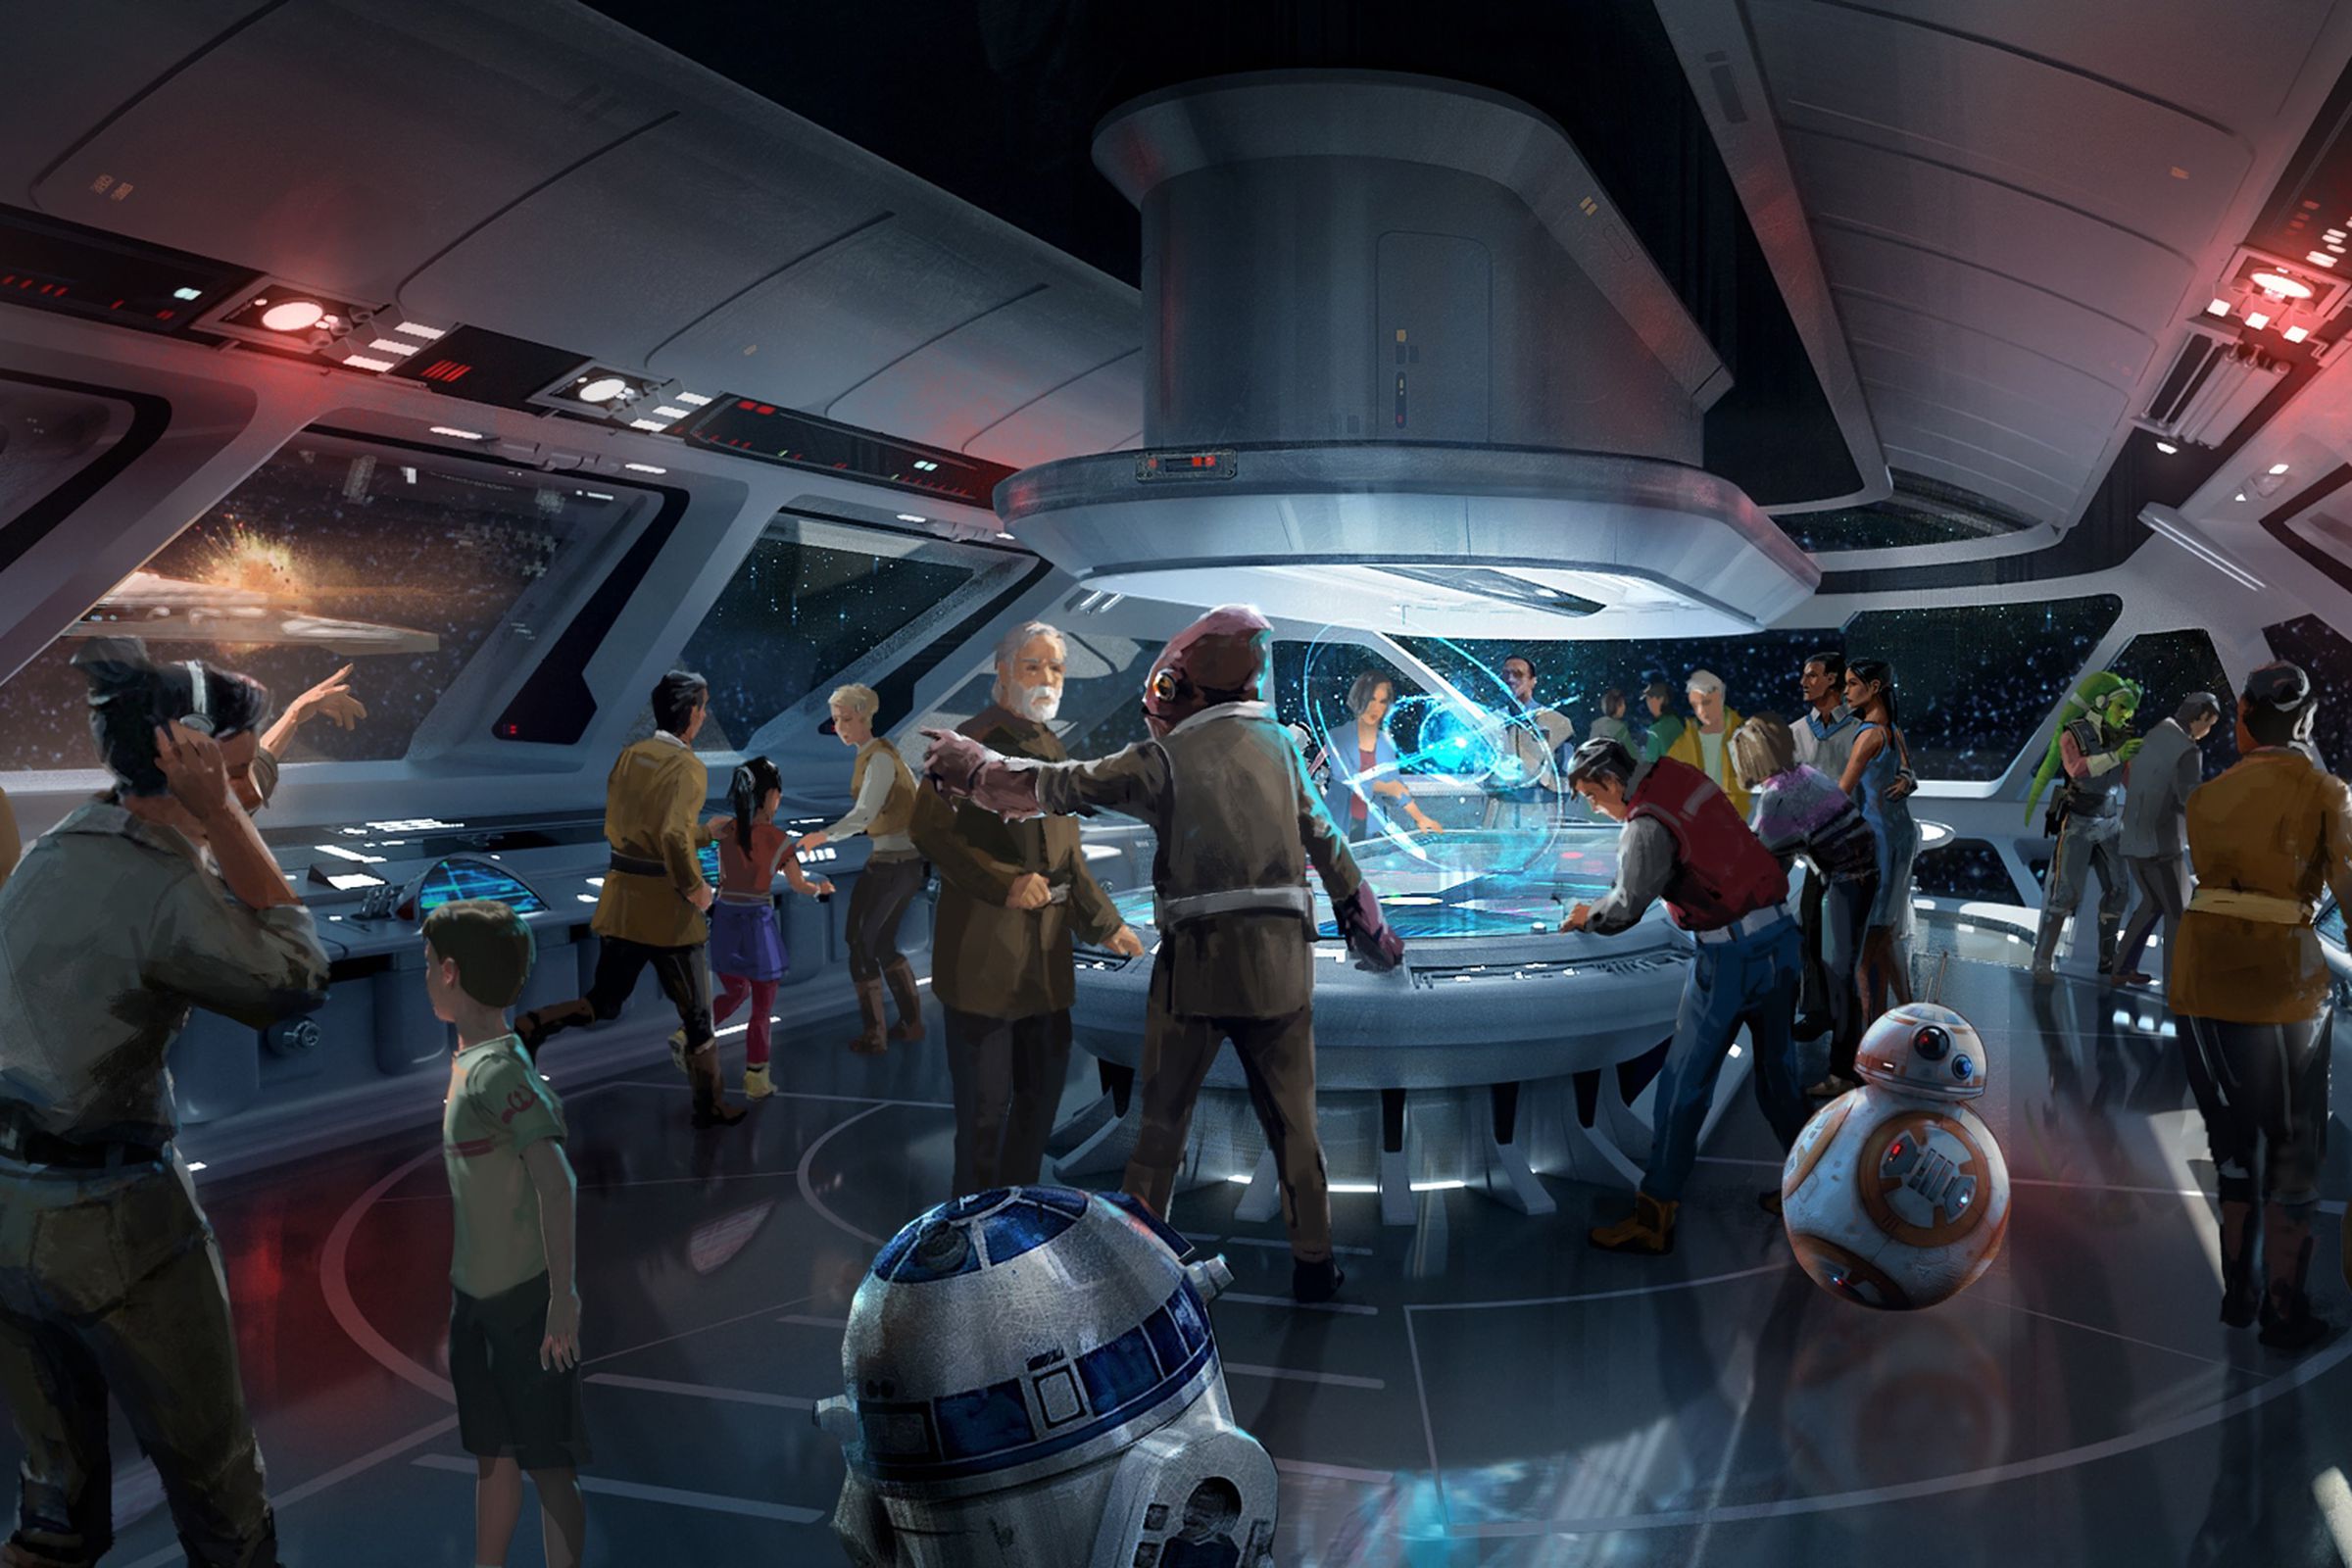 Concept art for Disney’s immersive ‘Star Wars’ hotel.